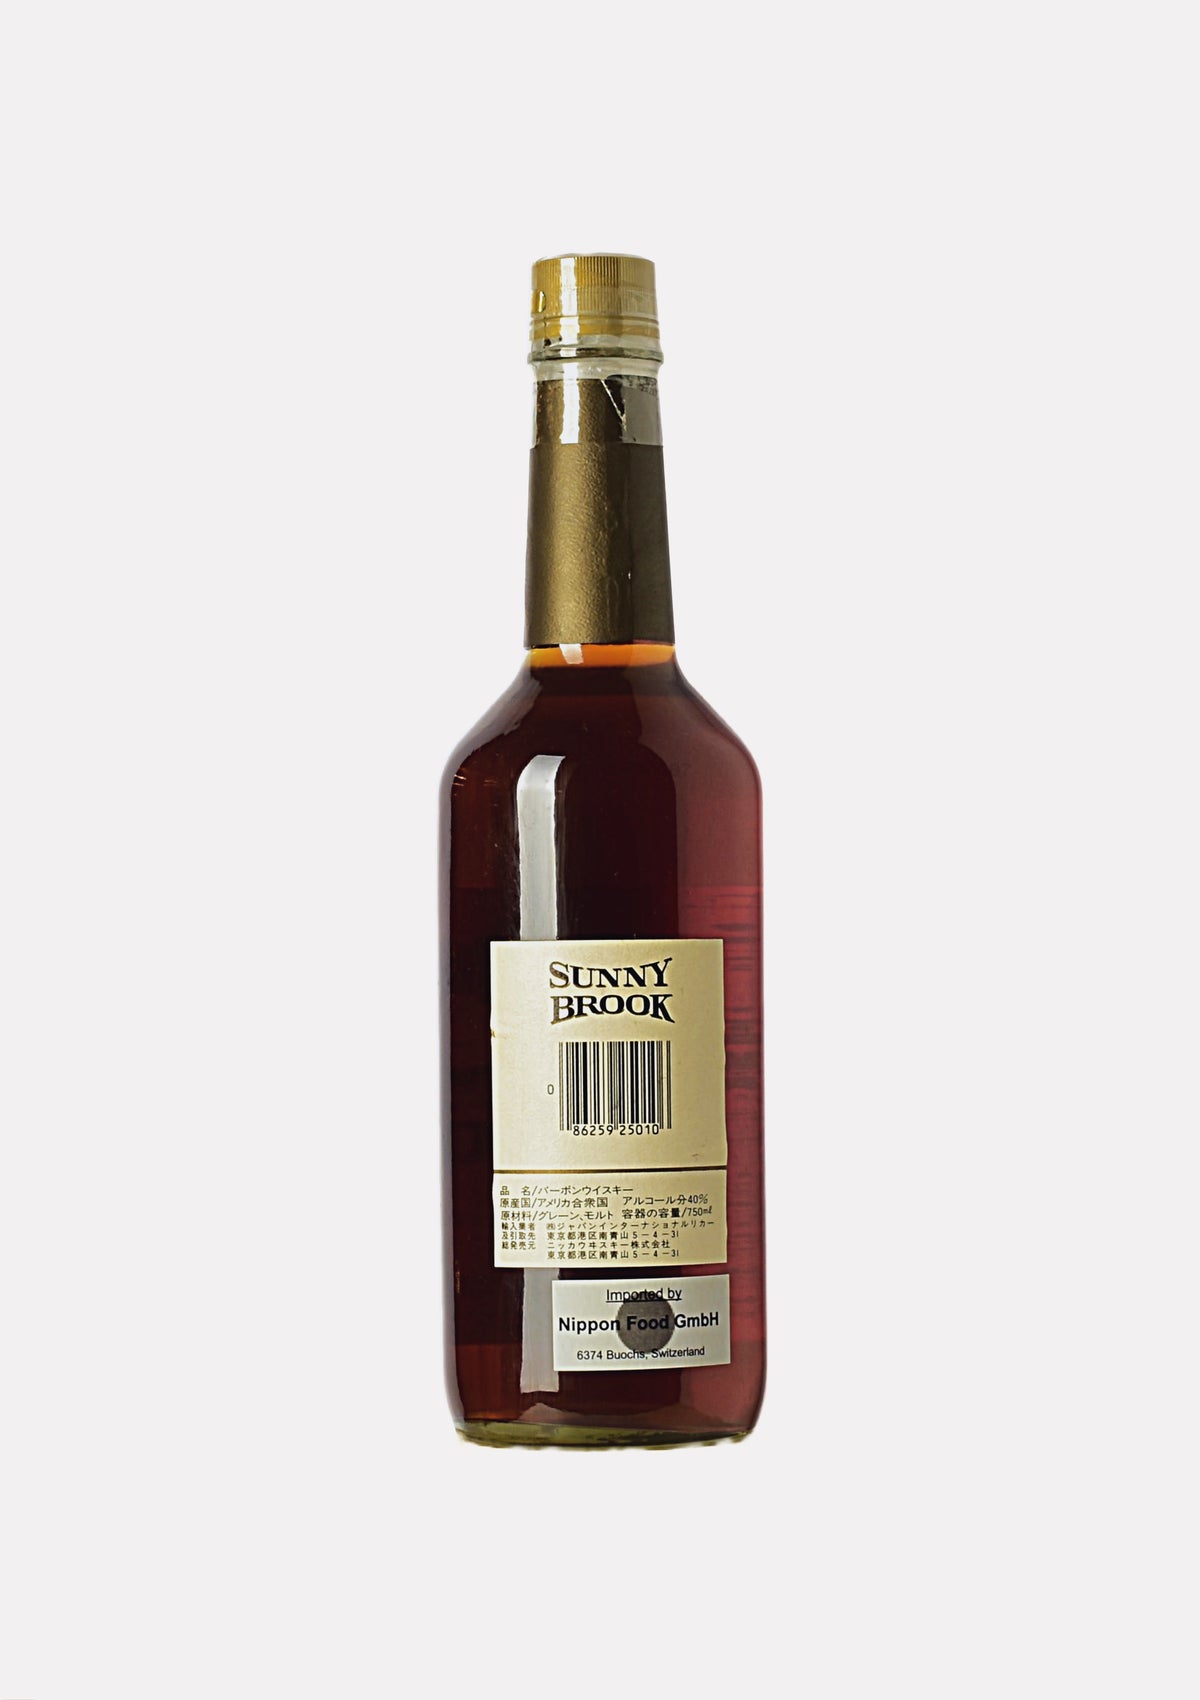 Sunny Brook Kentucky Straight Bourbon Whiskey